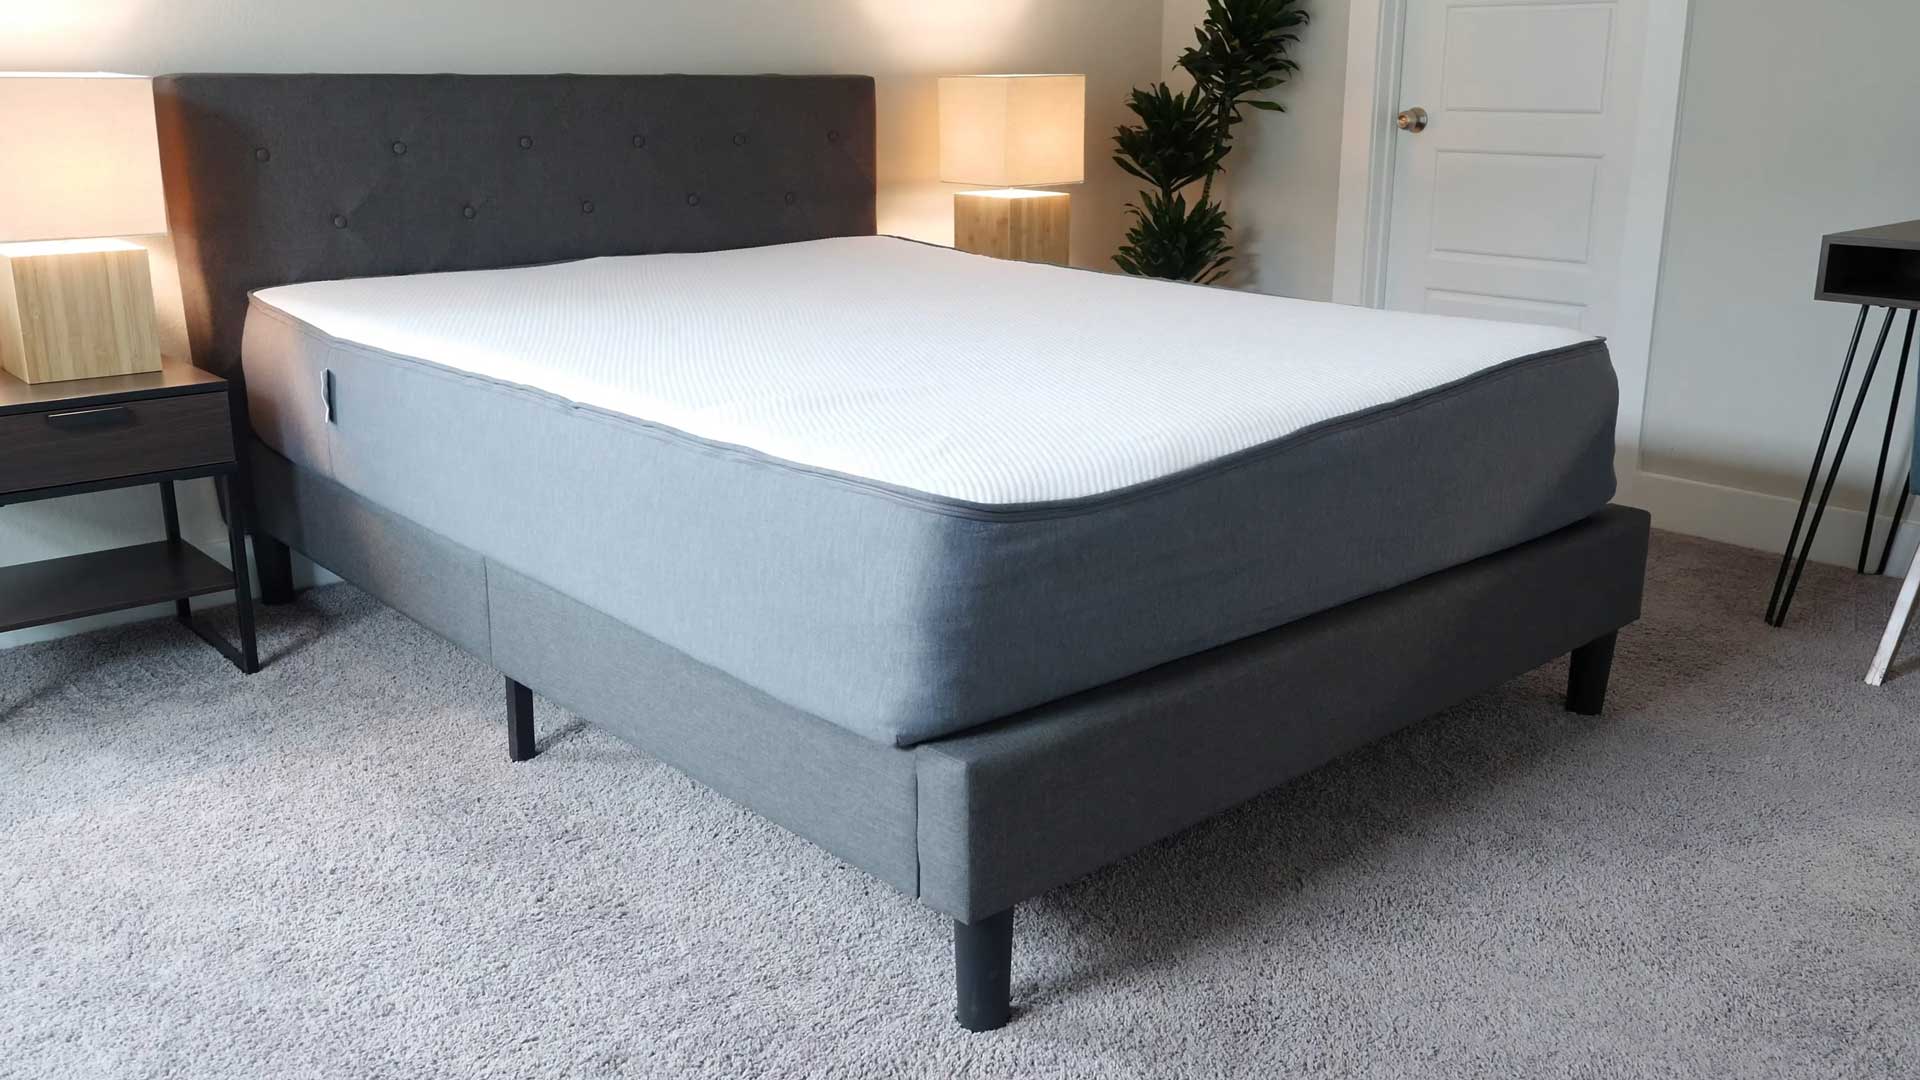 Hybrid mattress in a bedroom